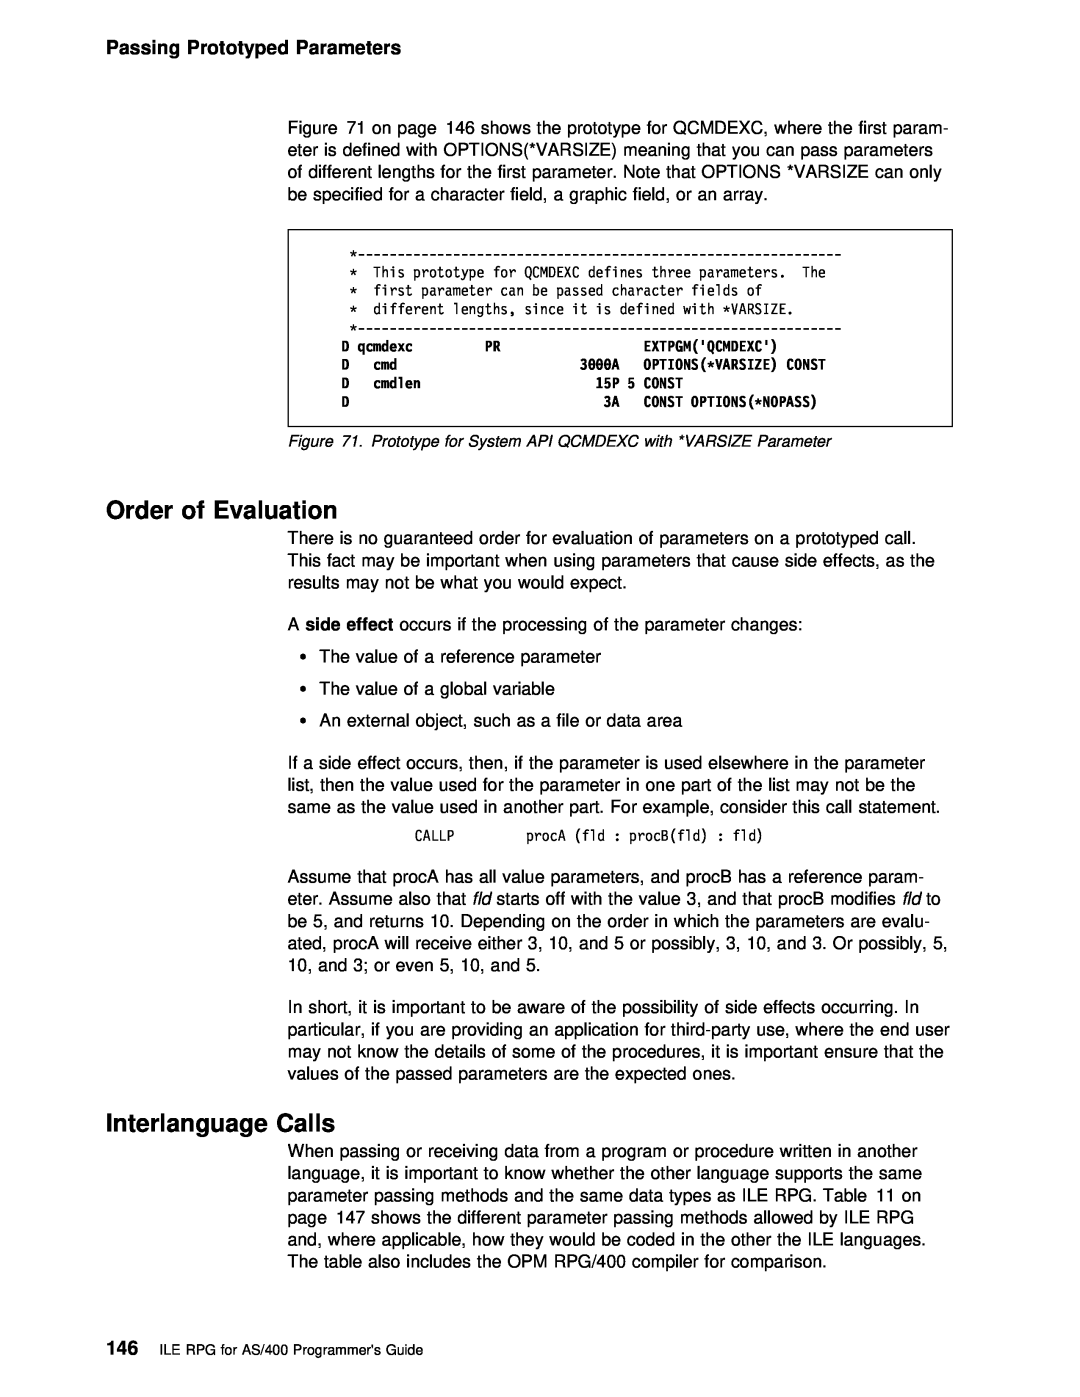 IBM AS/400 manual Order of Evaluation, Interlanguage Calls, Passing Prototyped Parameters, effect 